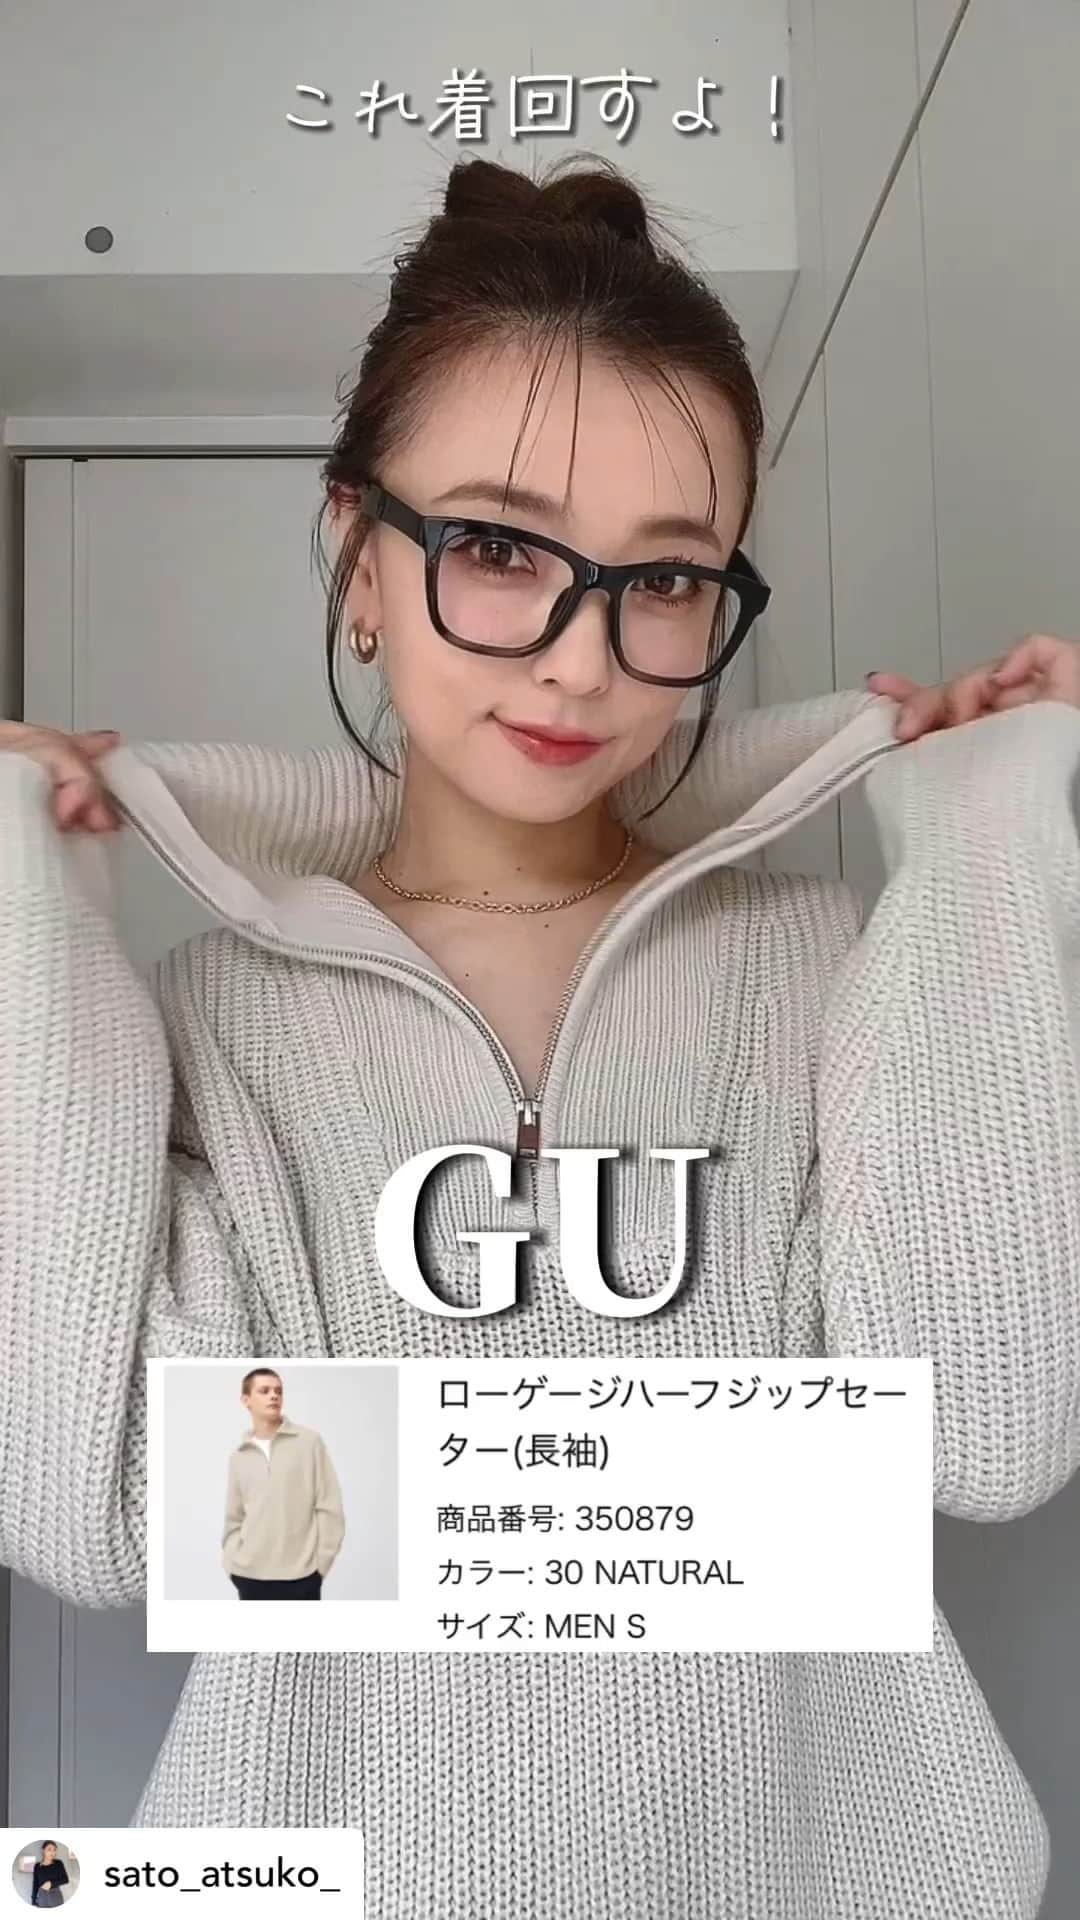 GU(ジーユー) のインスタグラム